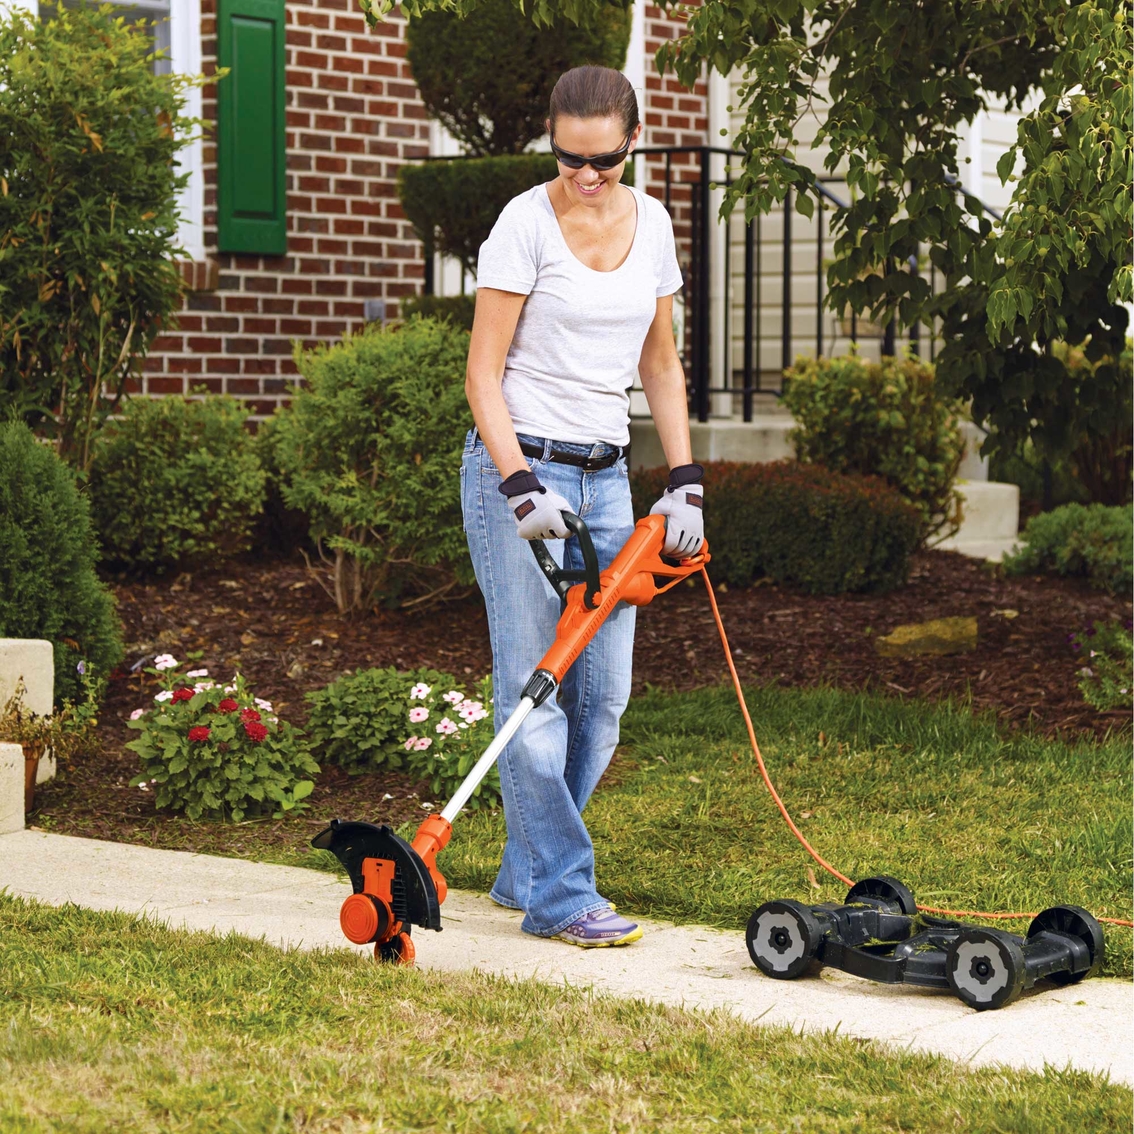 BLACK+DECKER 6.5 Corded Lawn Mower